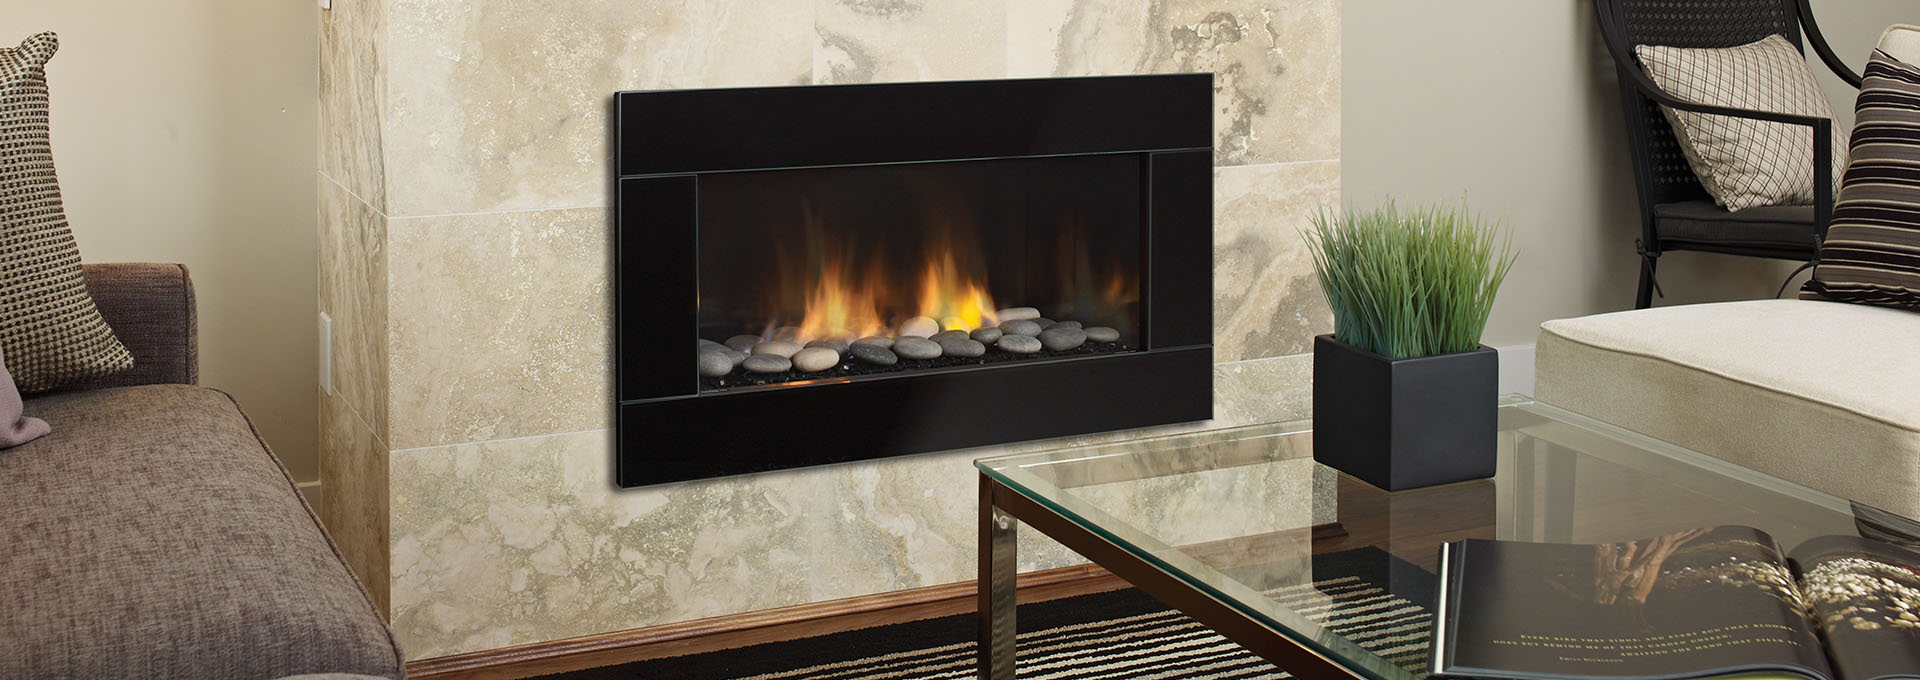 Glass Gas Fireplace Insert Lovely Fireplaces toronto Fireplace Repair & Maintenance